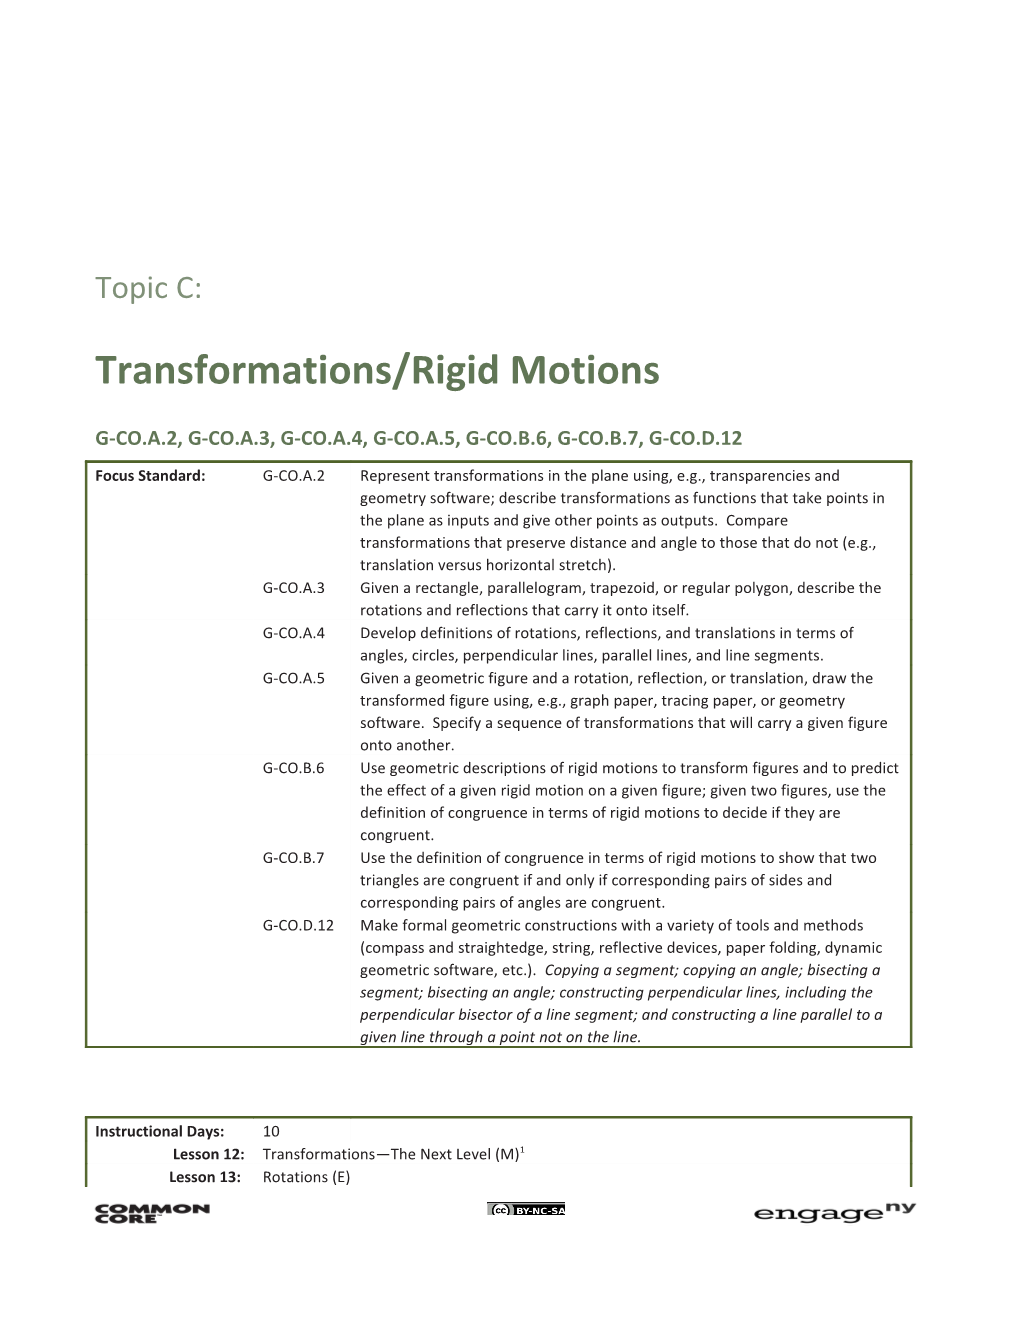 Transformations/Rigid Motions